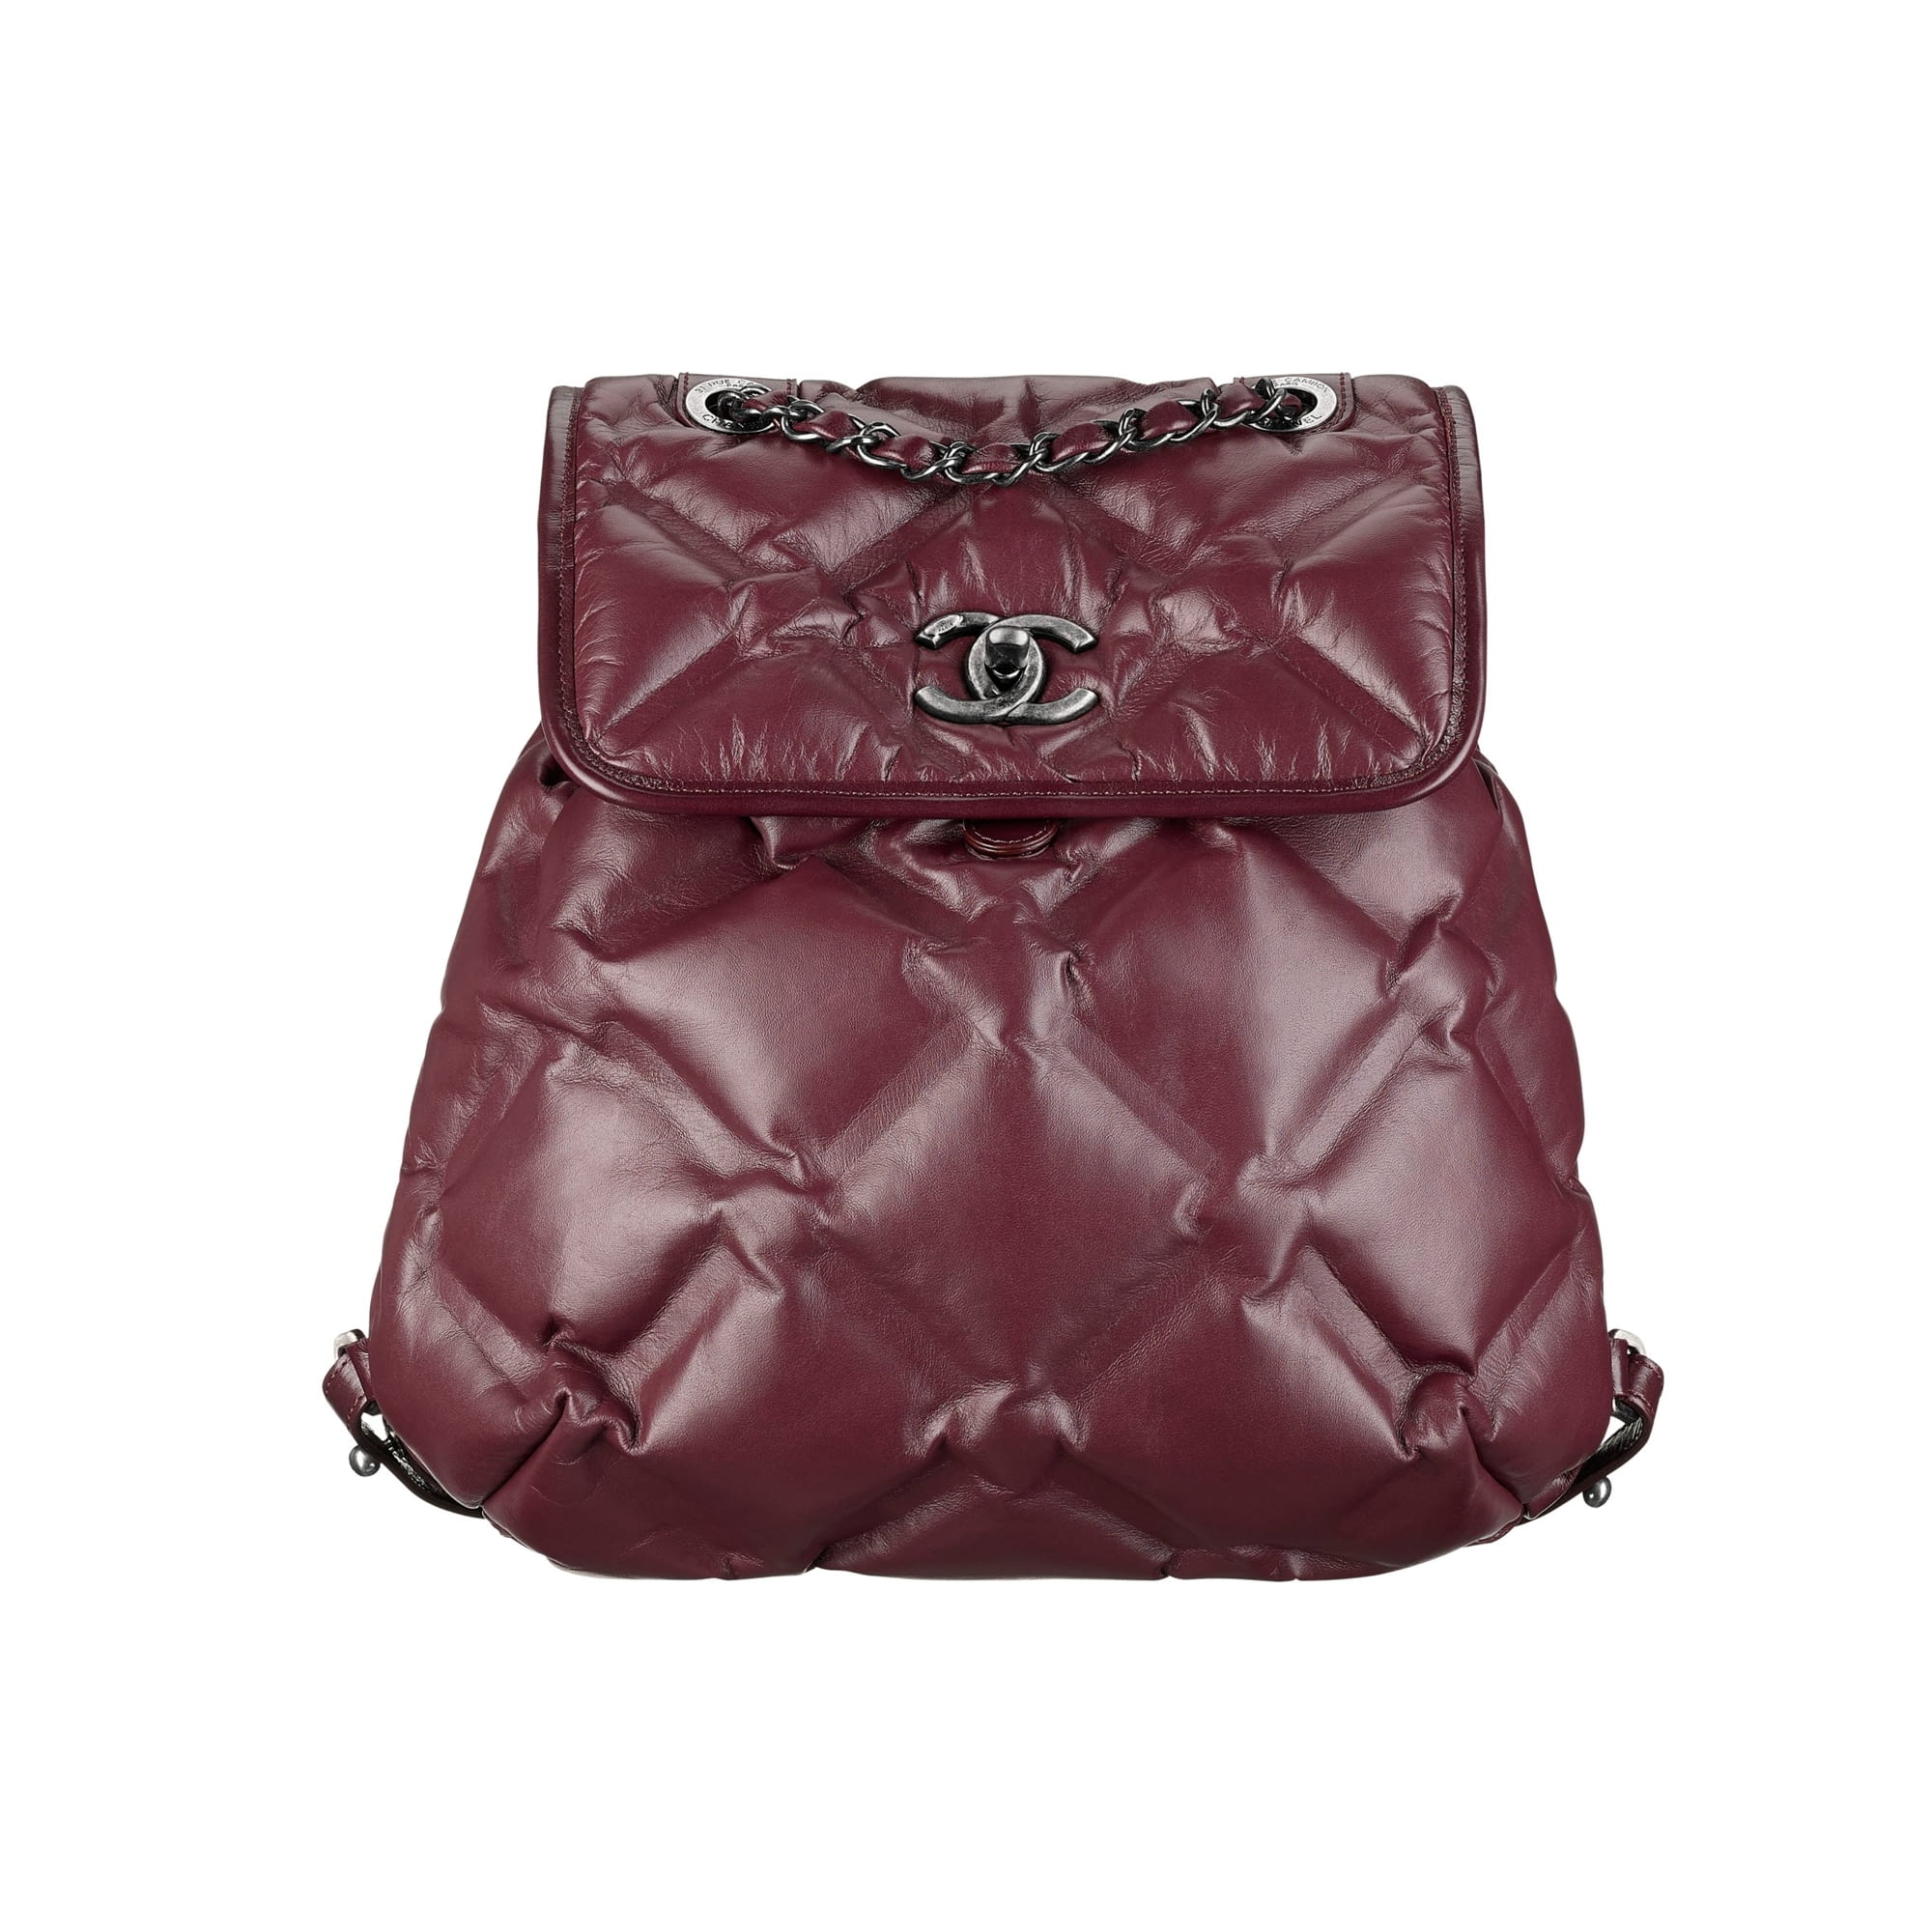 Gabriela Hearst Limited Edition Bordeaux Calf Leather Nina Bag